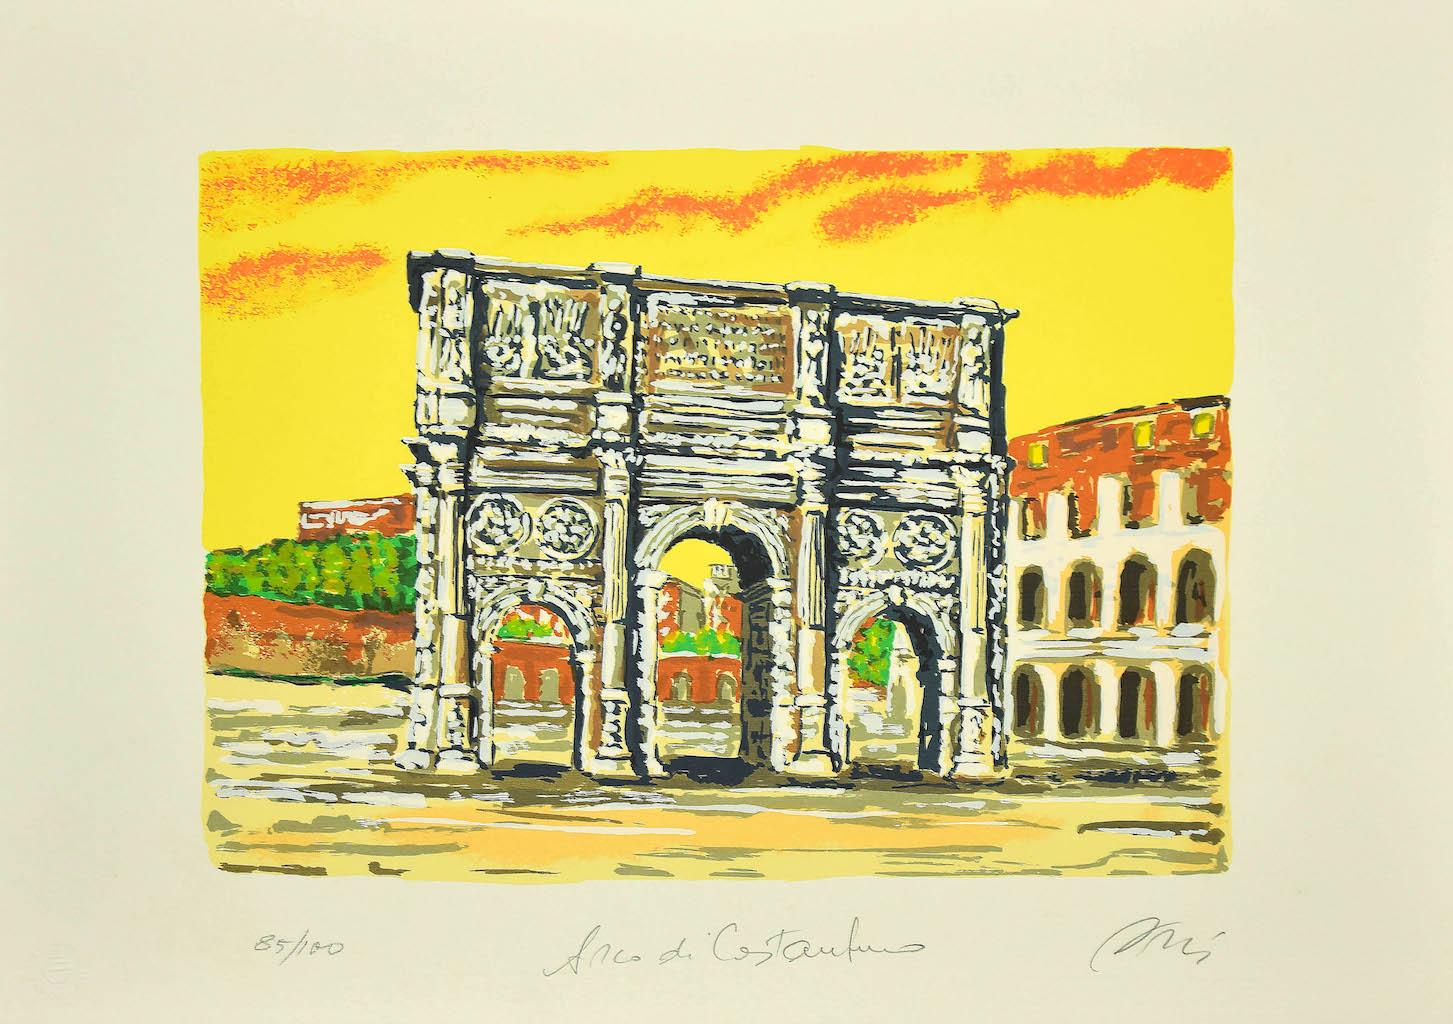 Roman Arch - Screen Print by Marco Orsi - 1980s